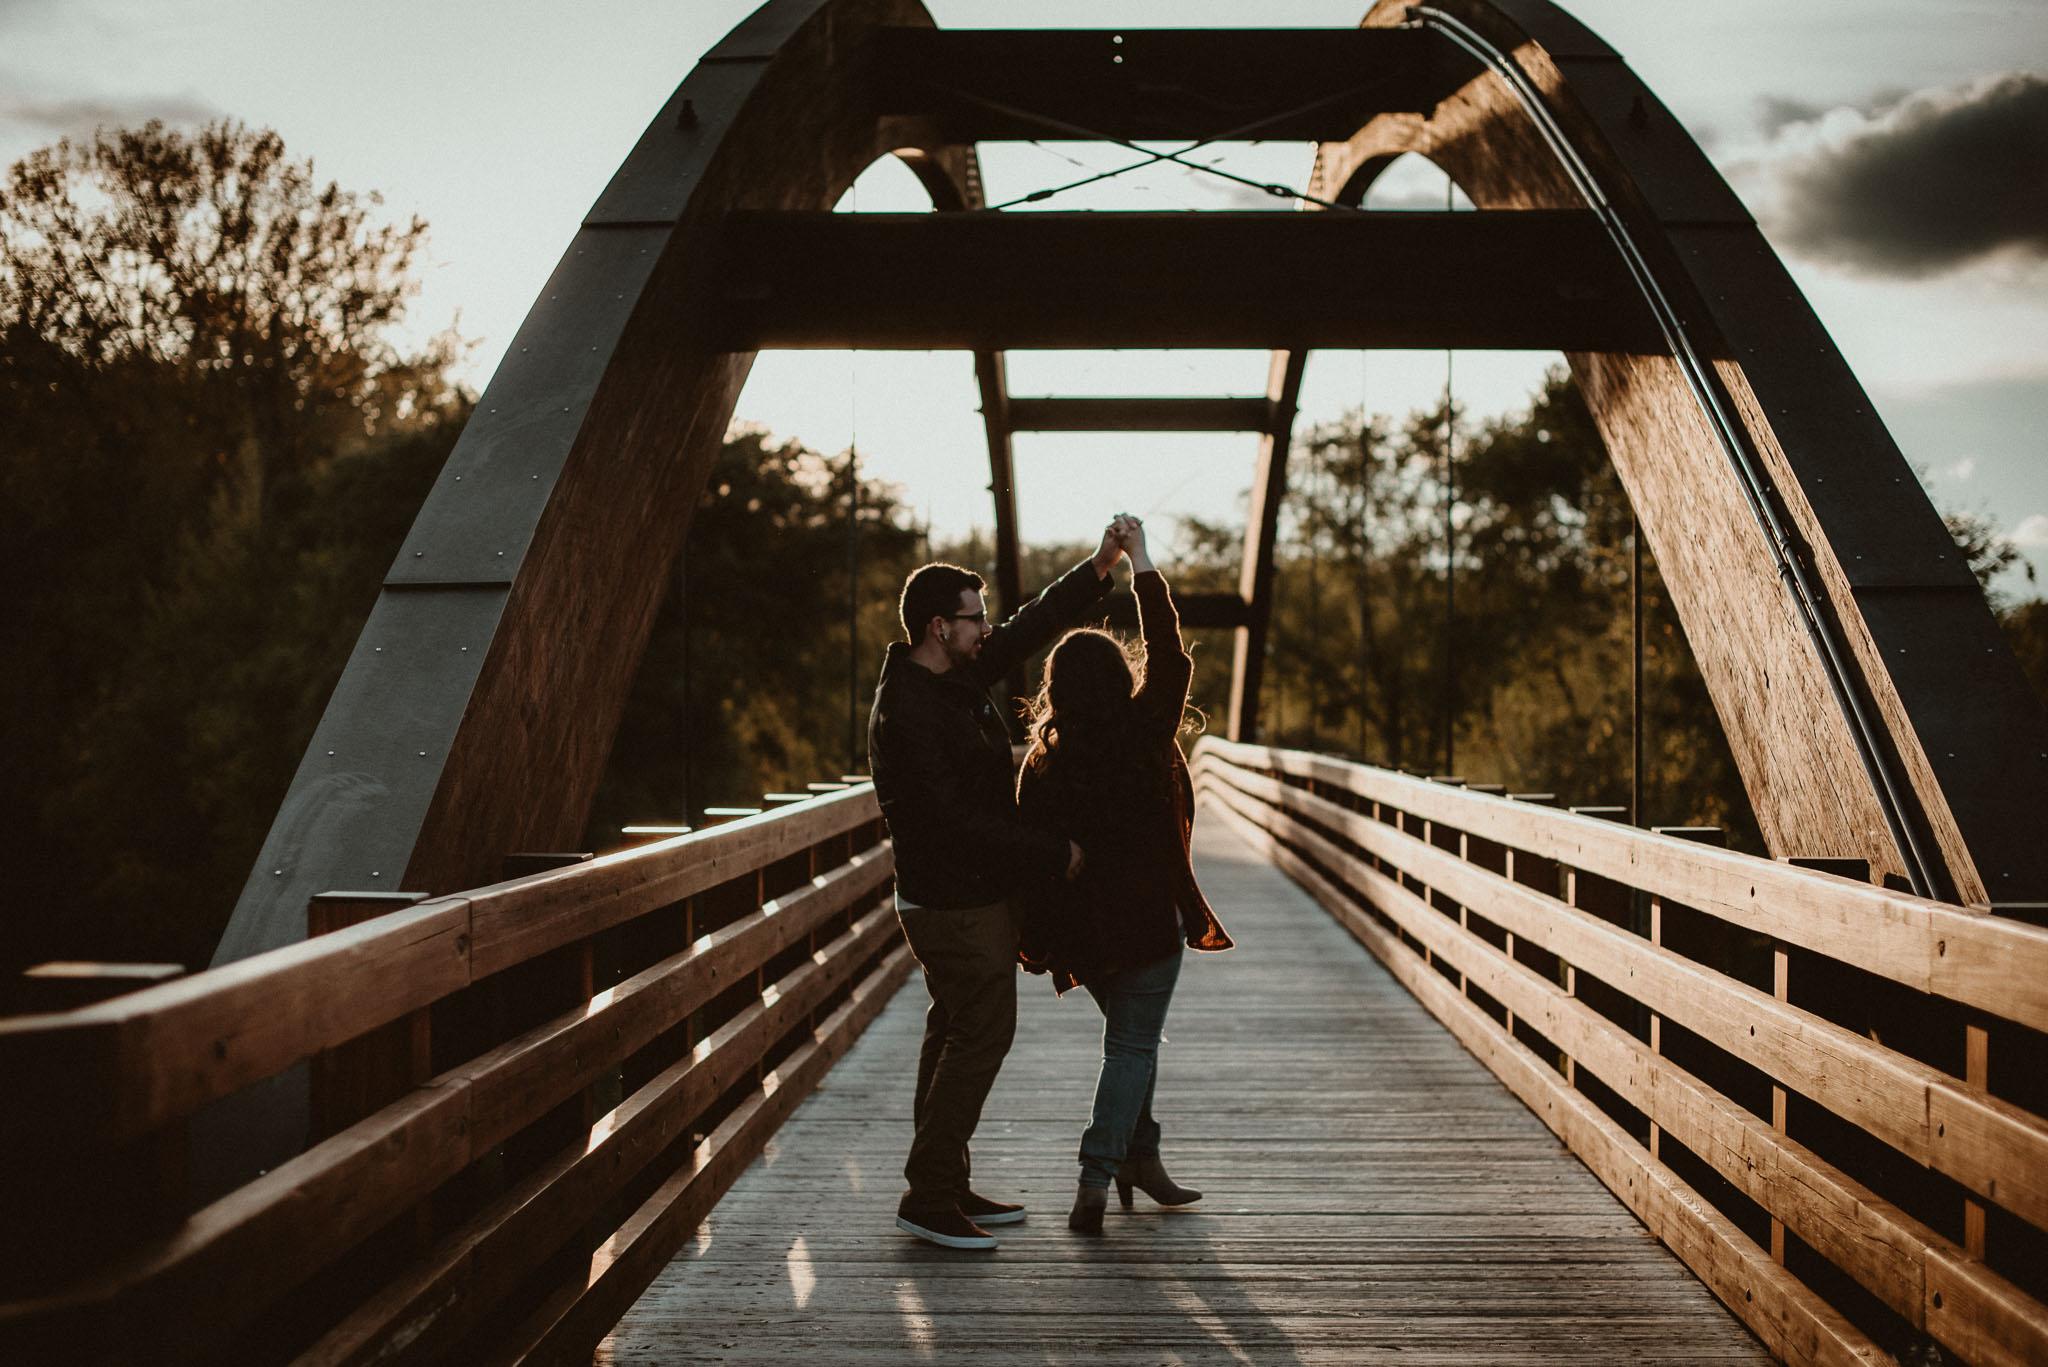 Twirling his fiance on the Tridge Bridge at sunset